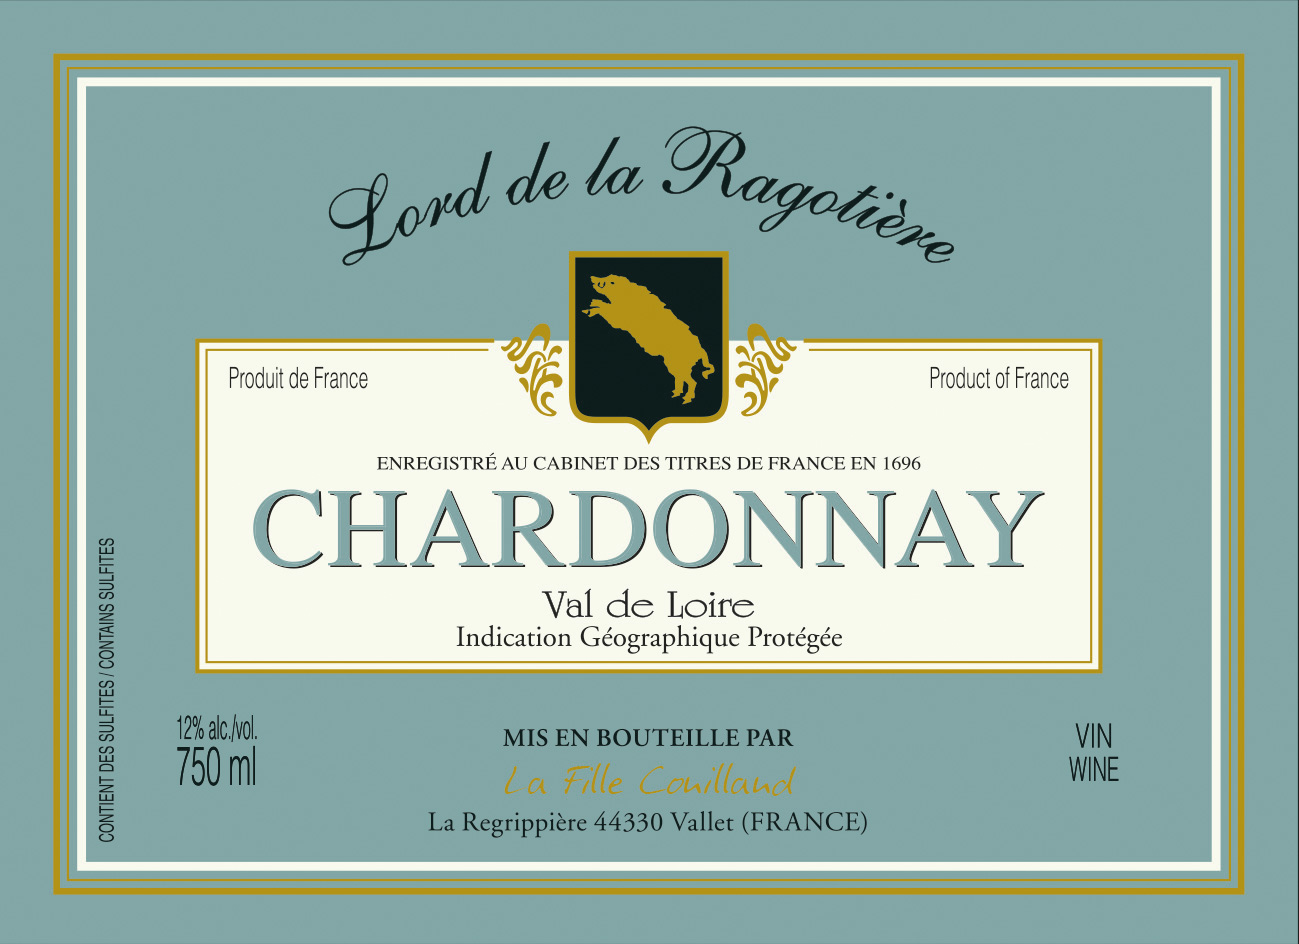 Lord de la Ragotière - Chardonnay